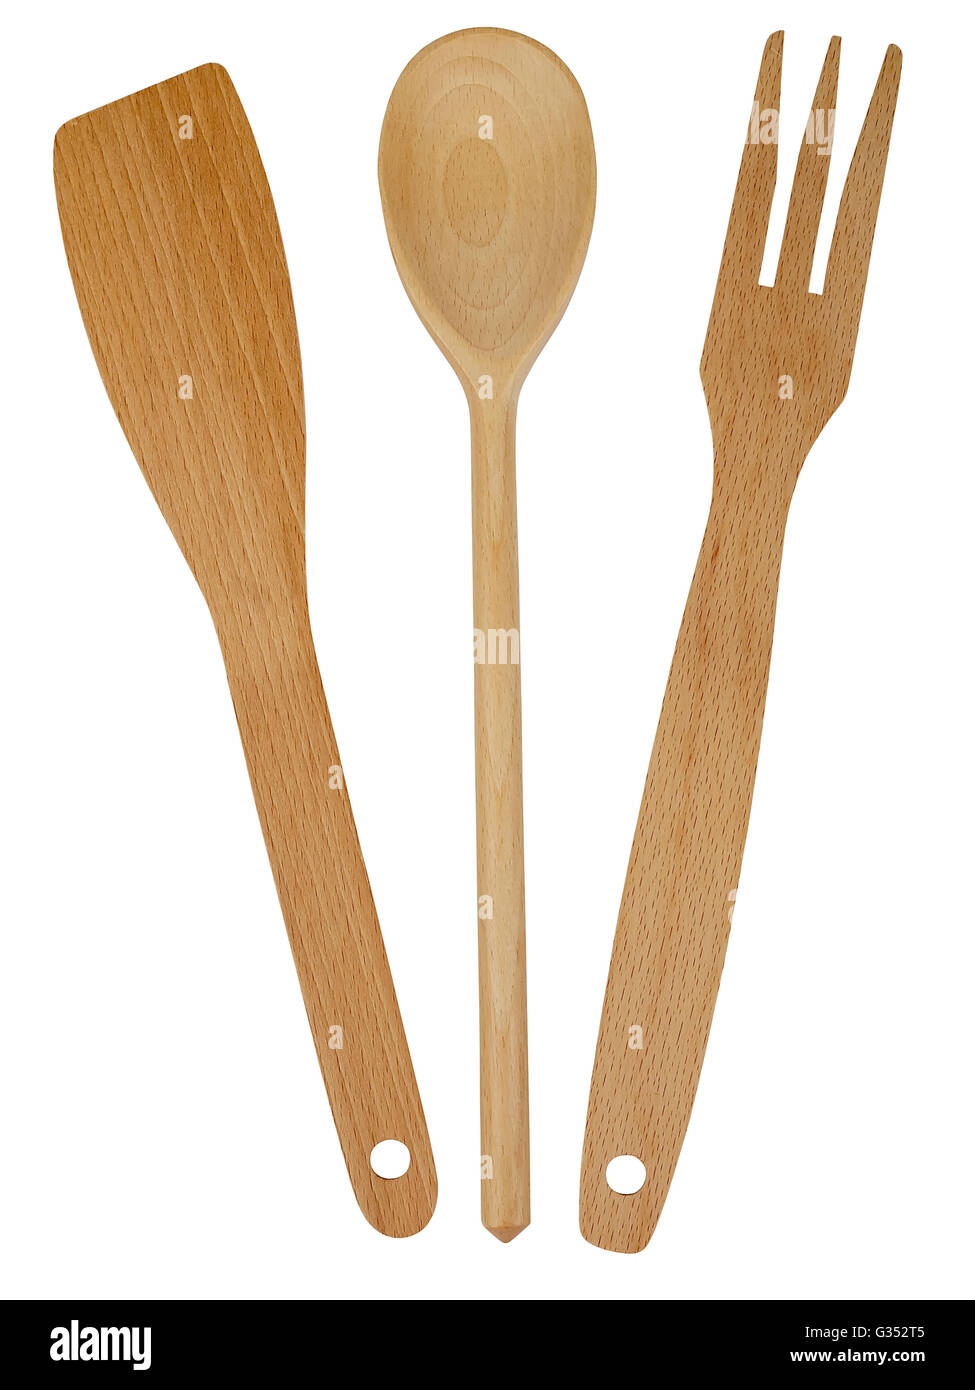 wooden kitchen utensil isolated on white background, studio shot Stock Photo